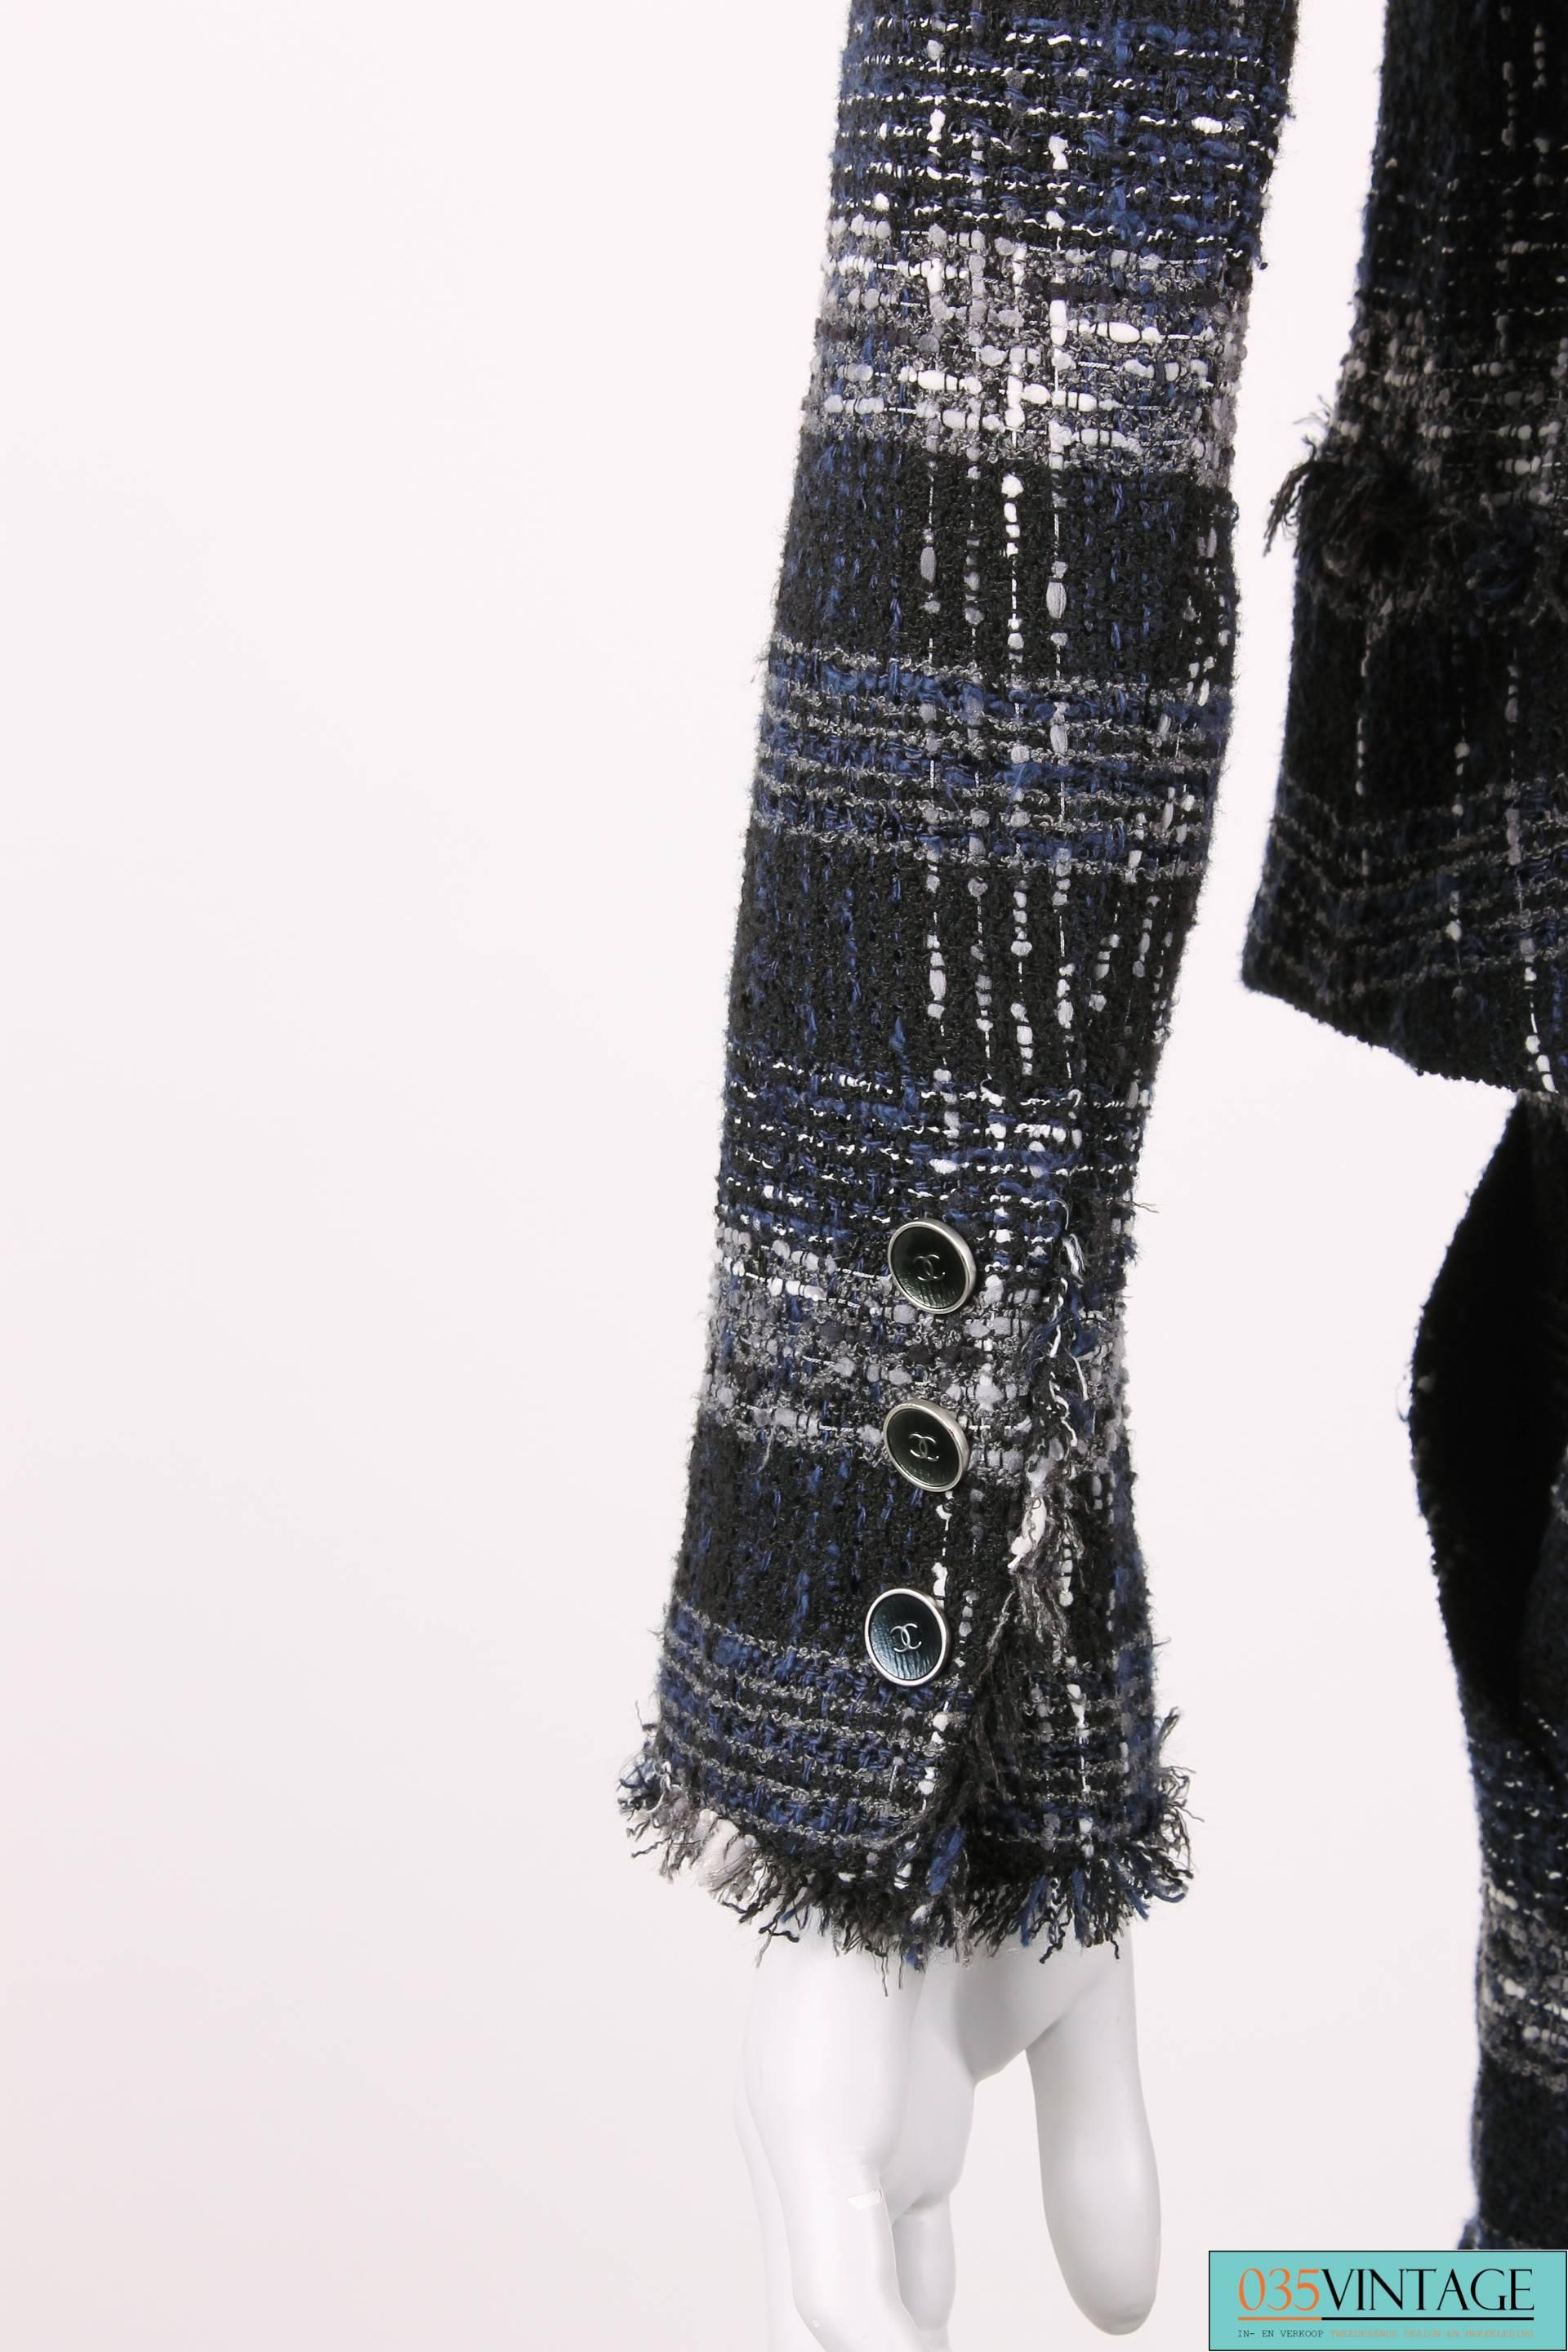 Chanel Suit 3-pcs Jacket, Skirt & Tie - dark blue/black/grey/white 3